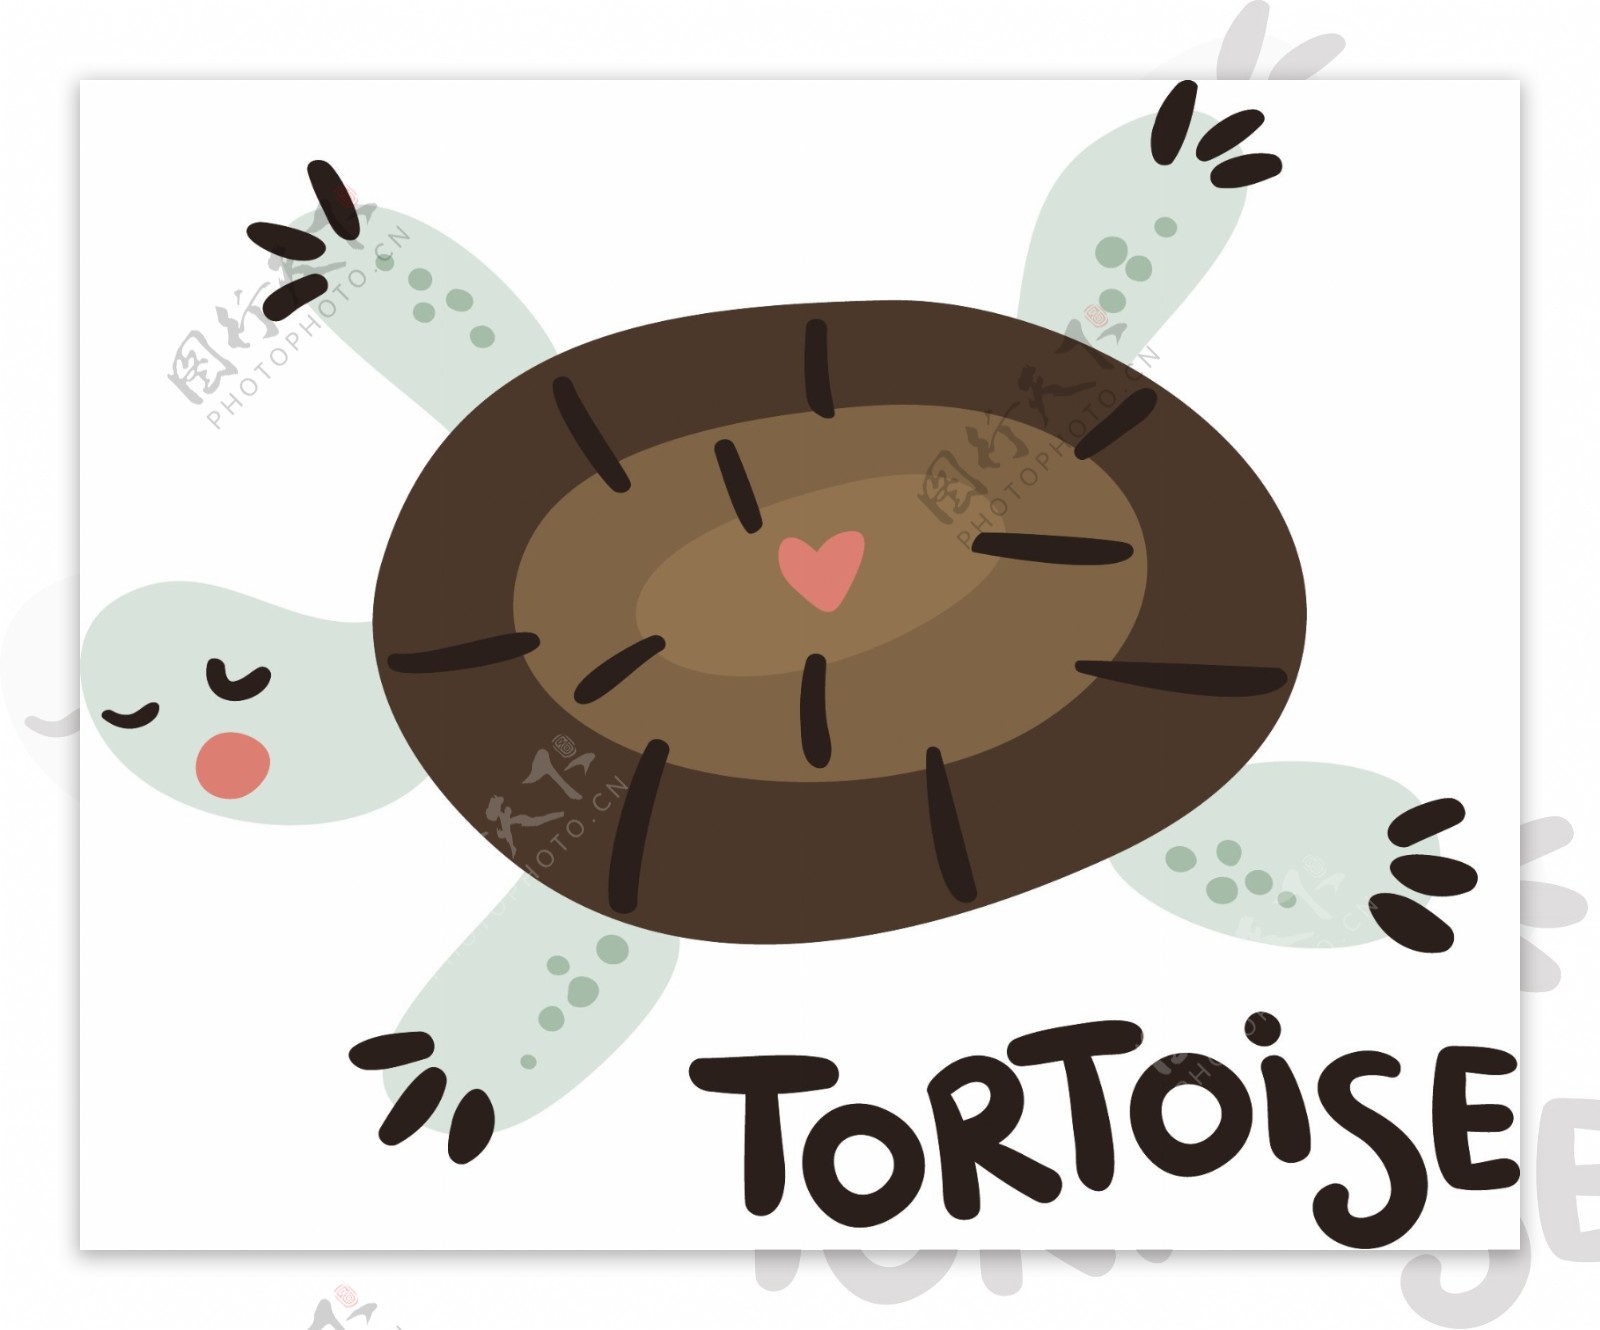 TORTOISE可爱卡通动物人物矢量素材